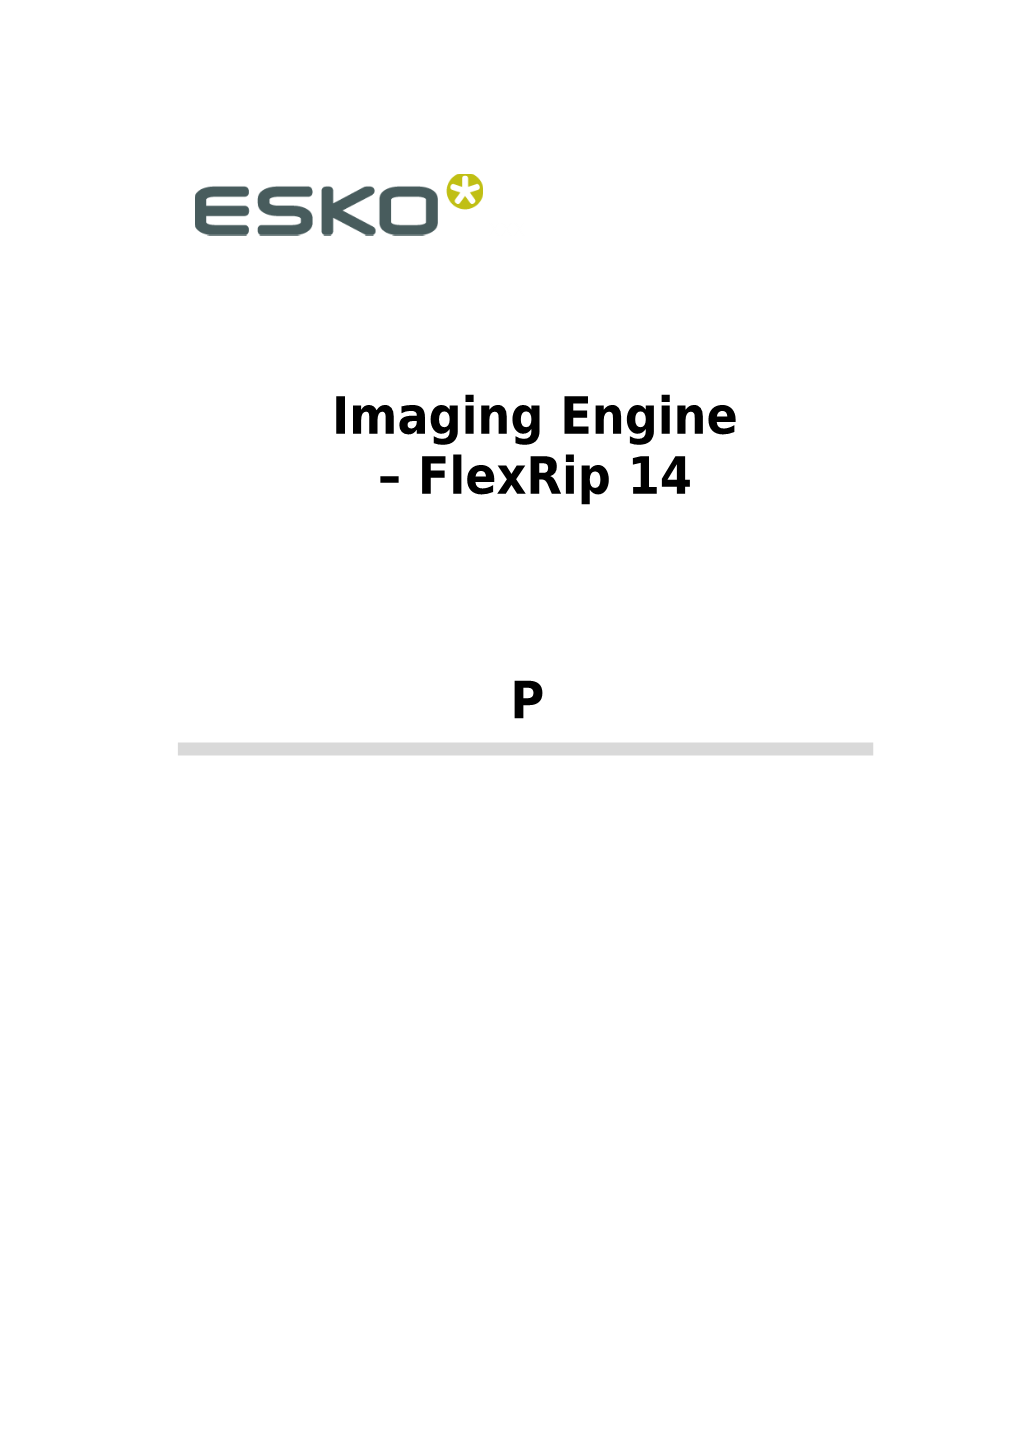 Imaging Engine – Flexrip 14 P